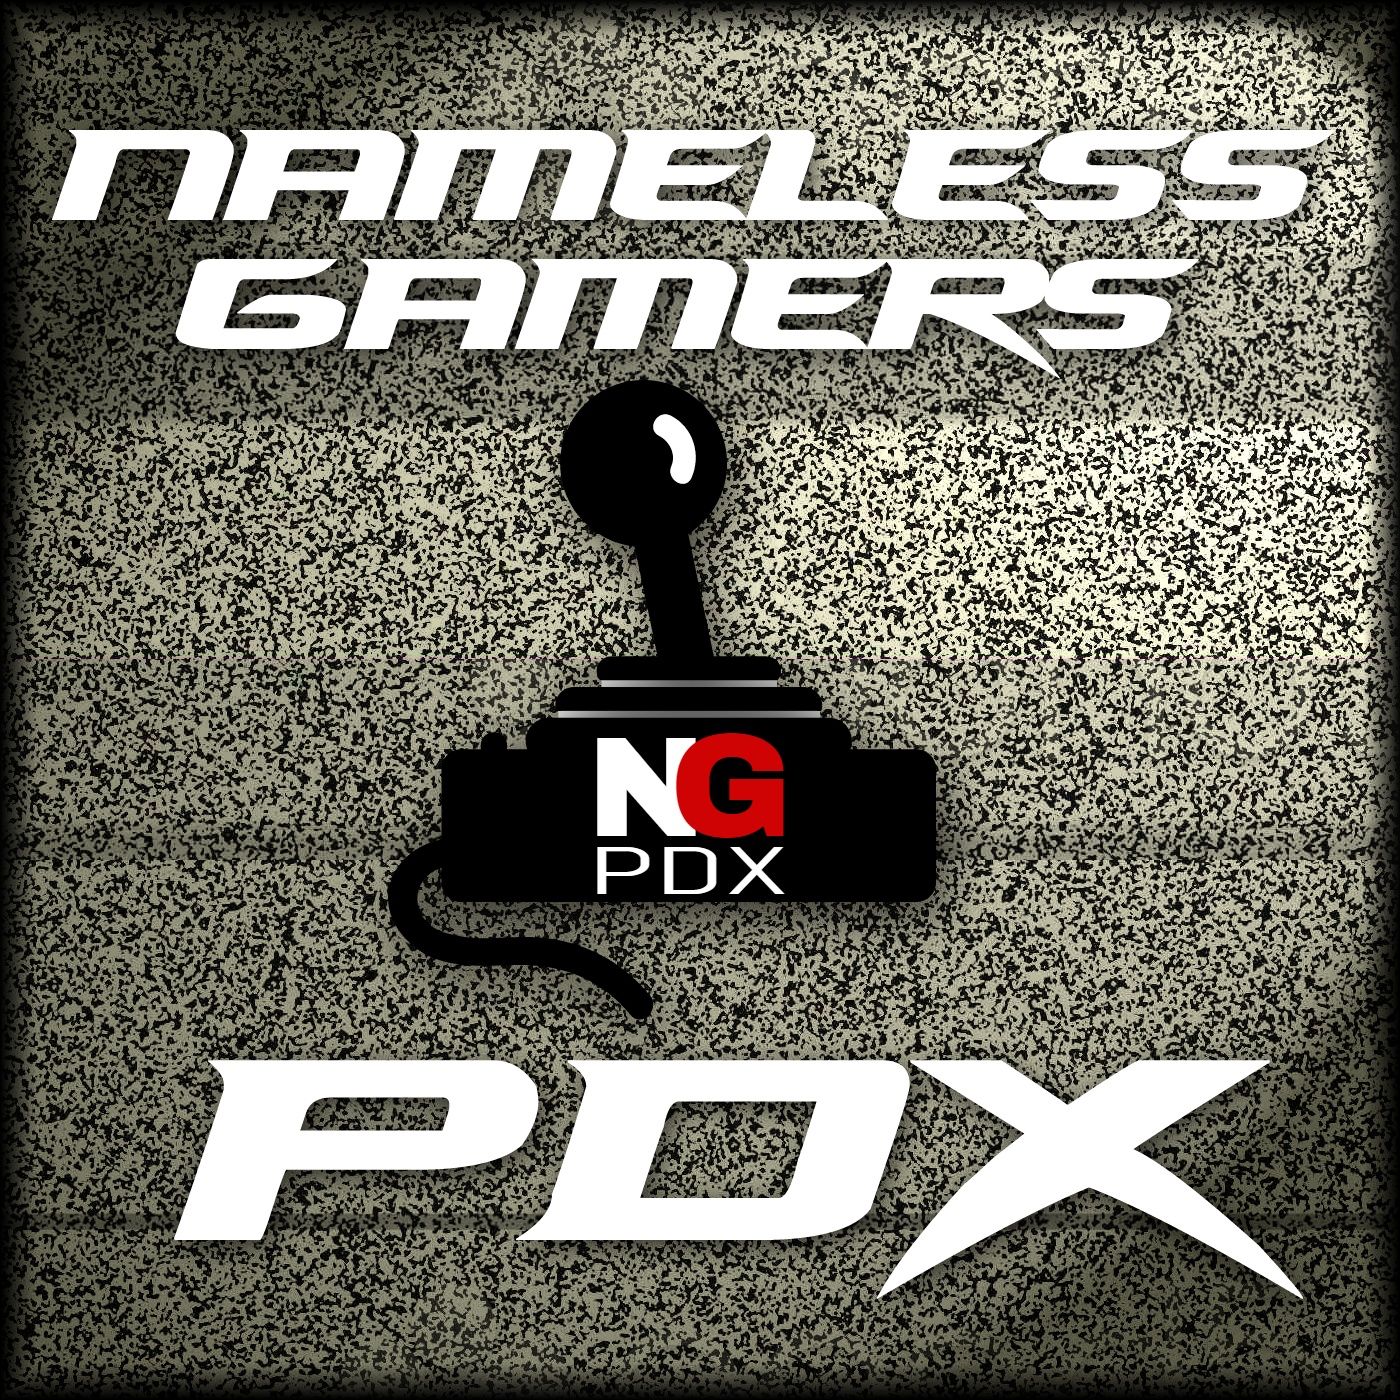 Nameless Gamers PDX